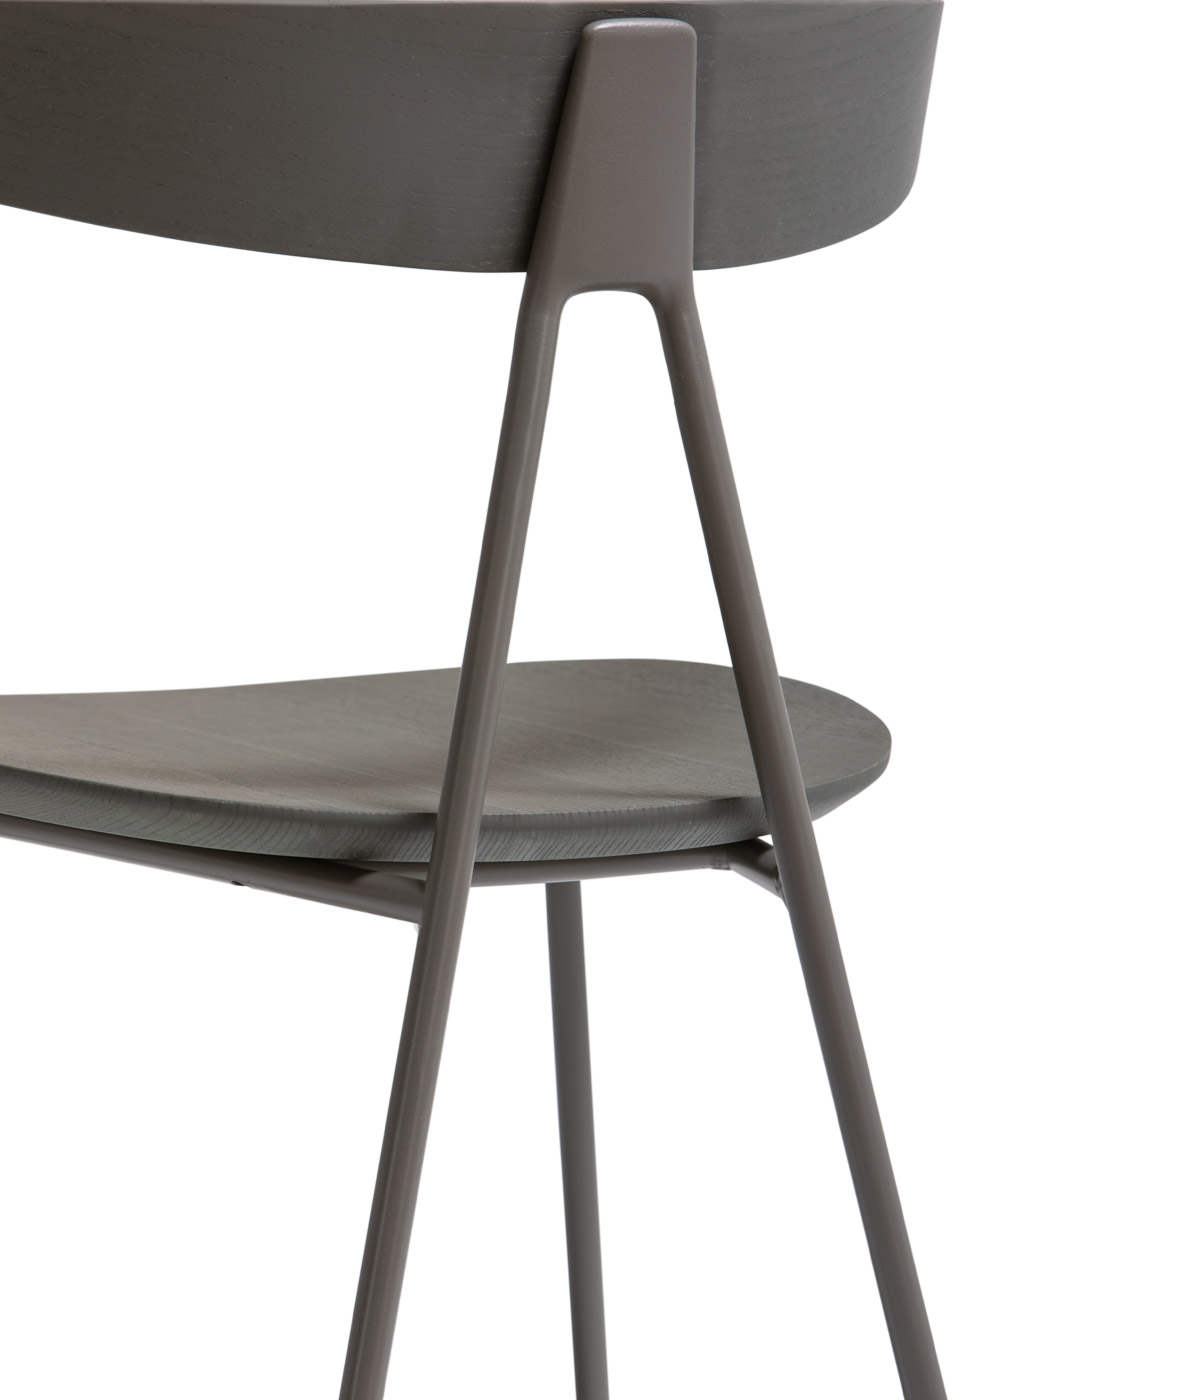 Compass chair with metallic legs - Vergés